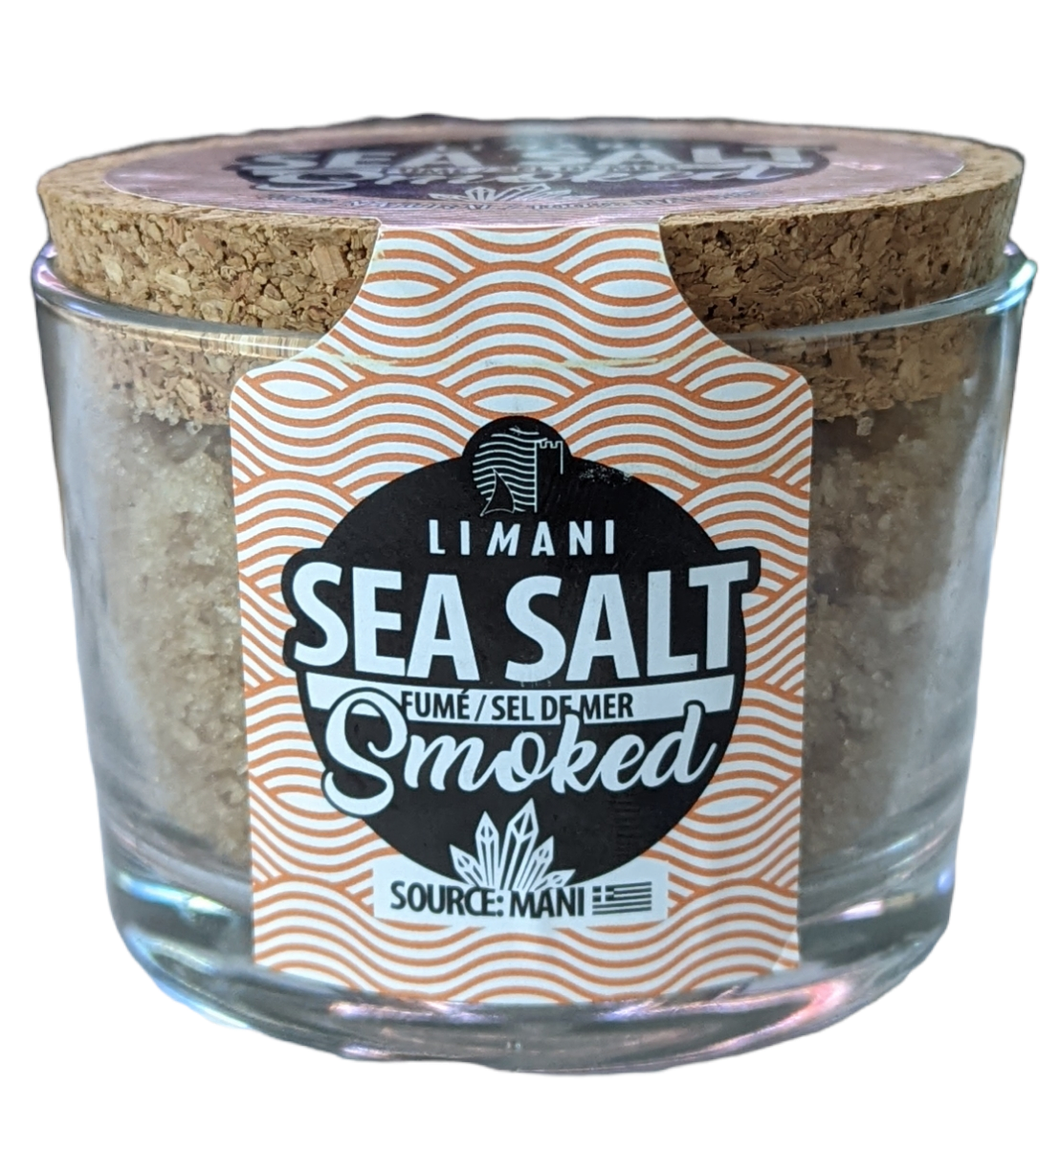 Limani Smoked Sea Salt, All Natural Greek Finishing Fleur de Sel, 130g (4.55oz), hand harvested from Mani, Greece